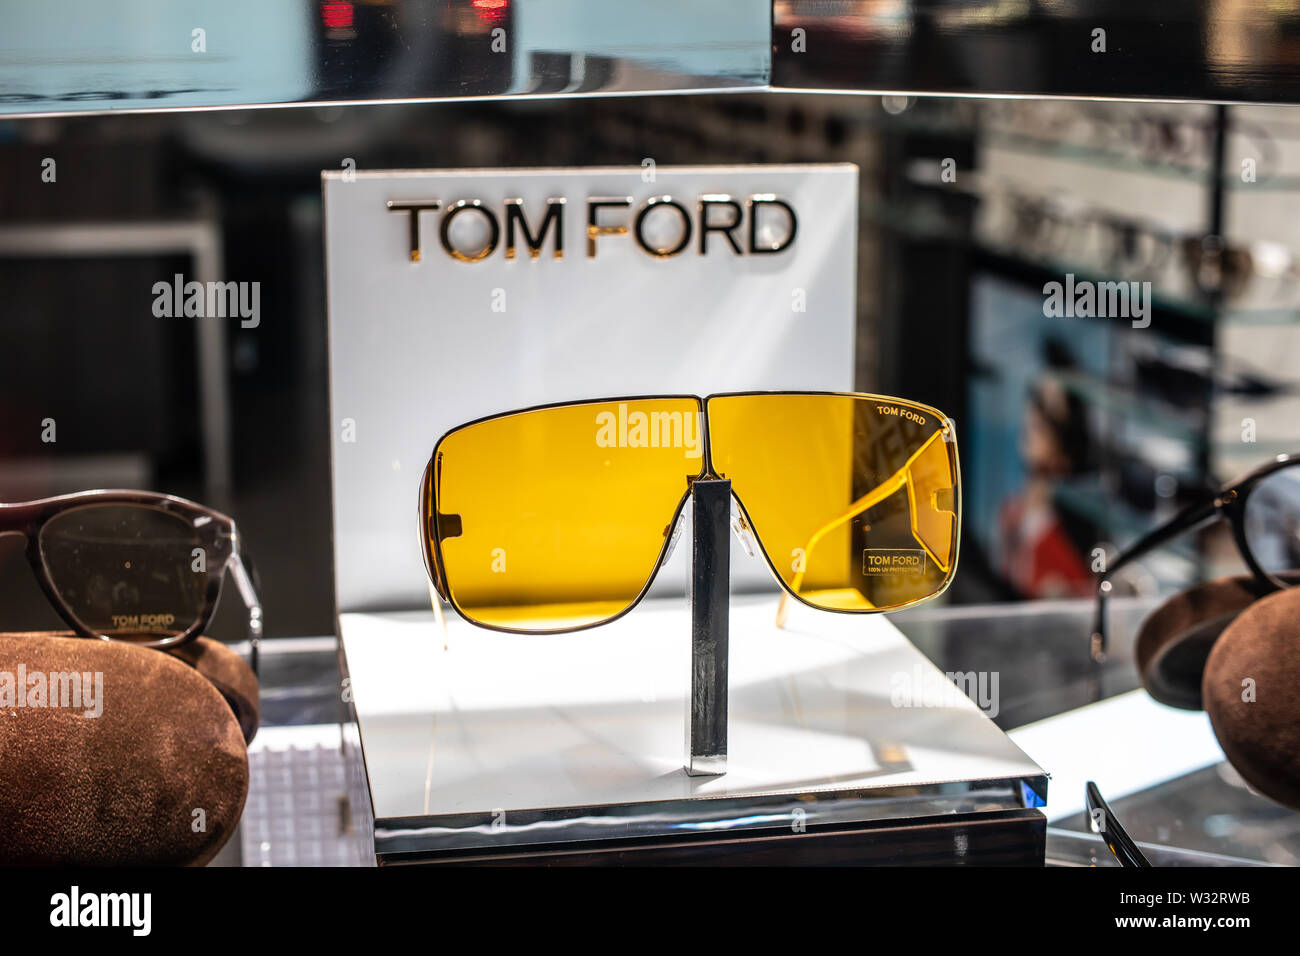 Tom ford glasses -Fotos und -Bildmaterial in hoher Auflösung – Alamy